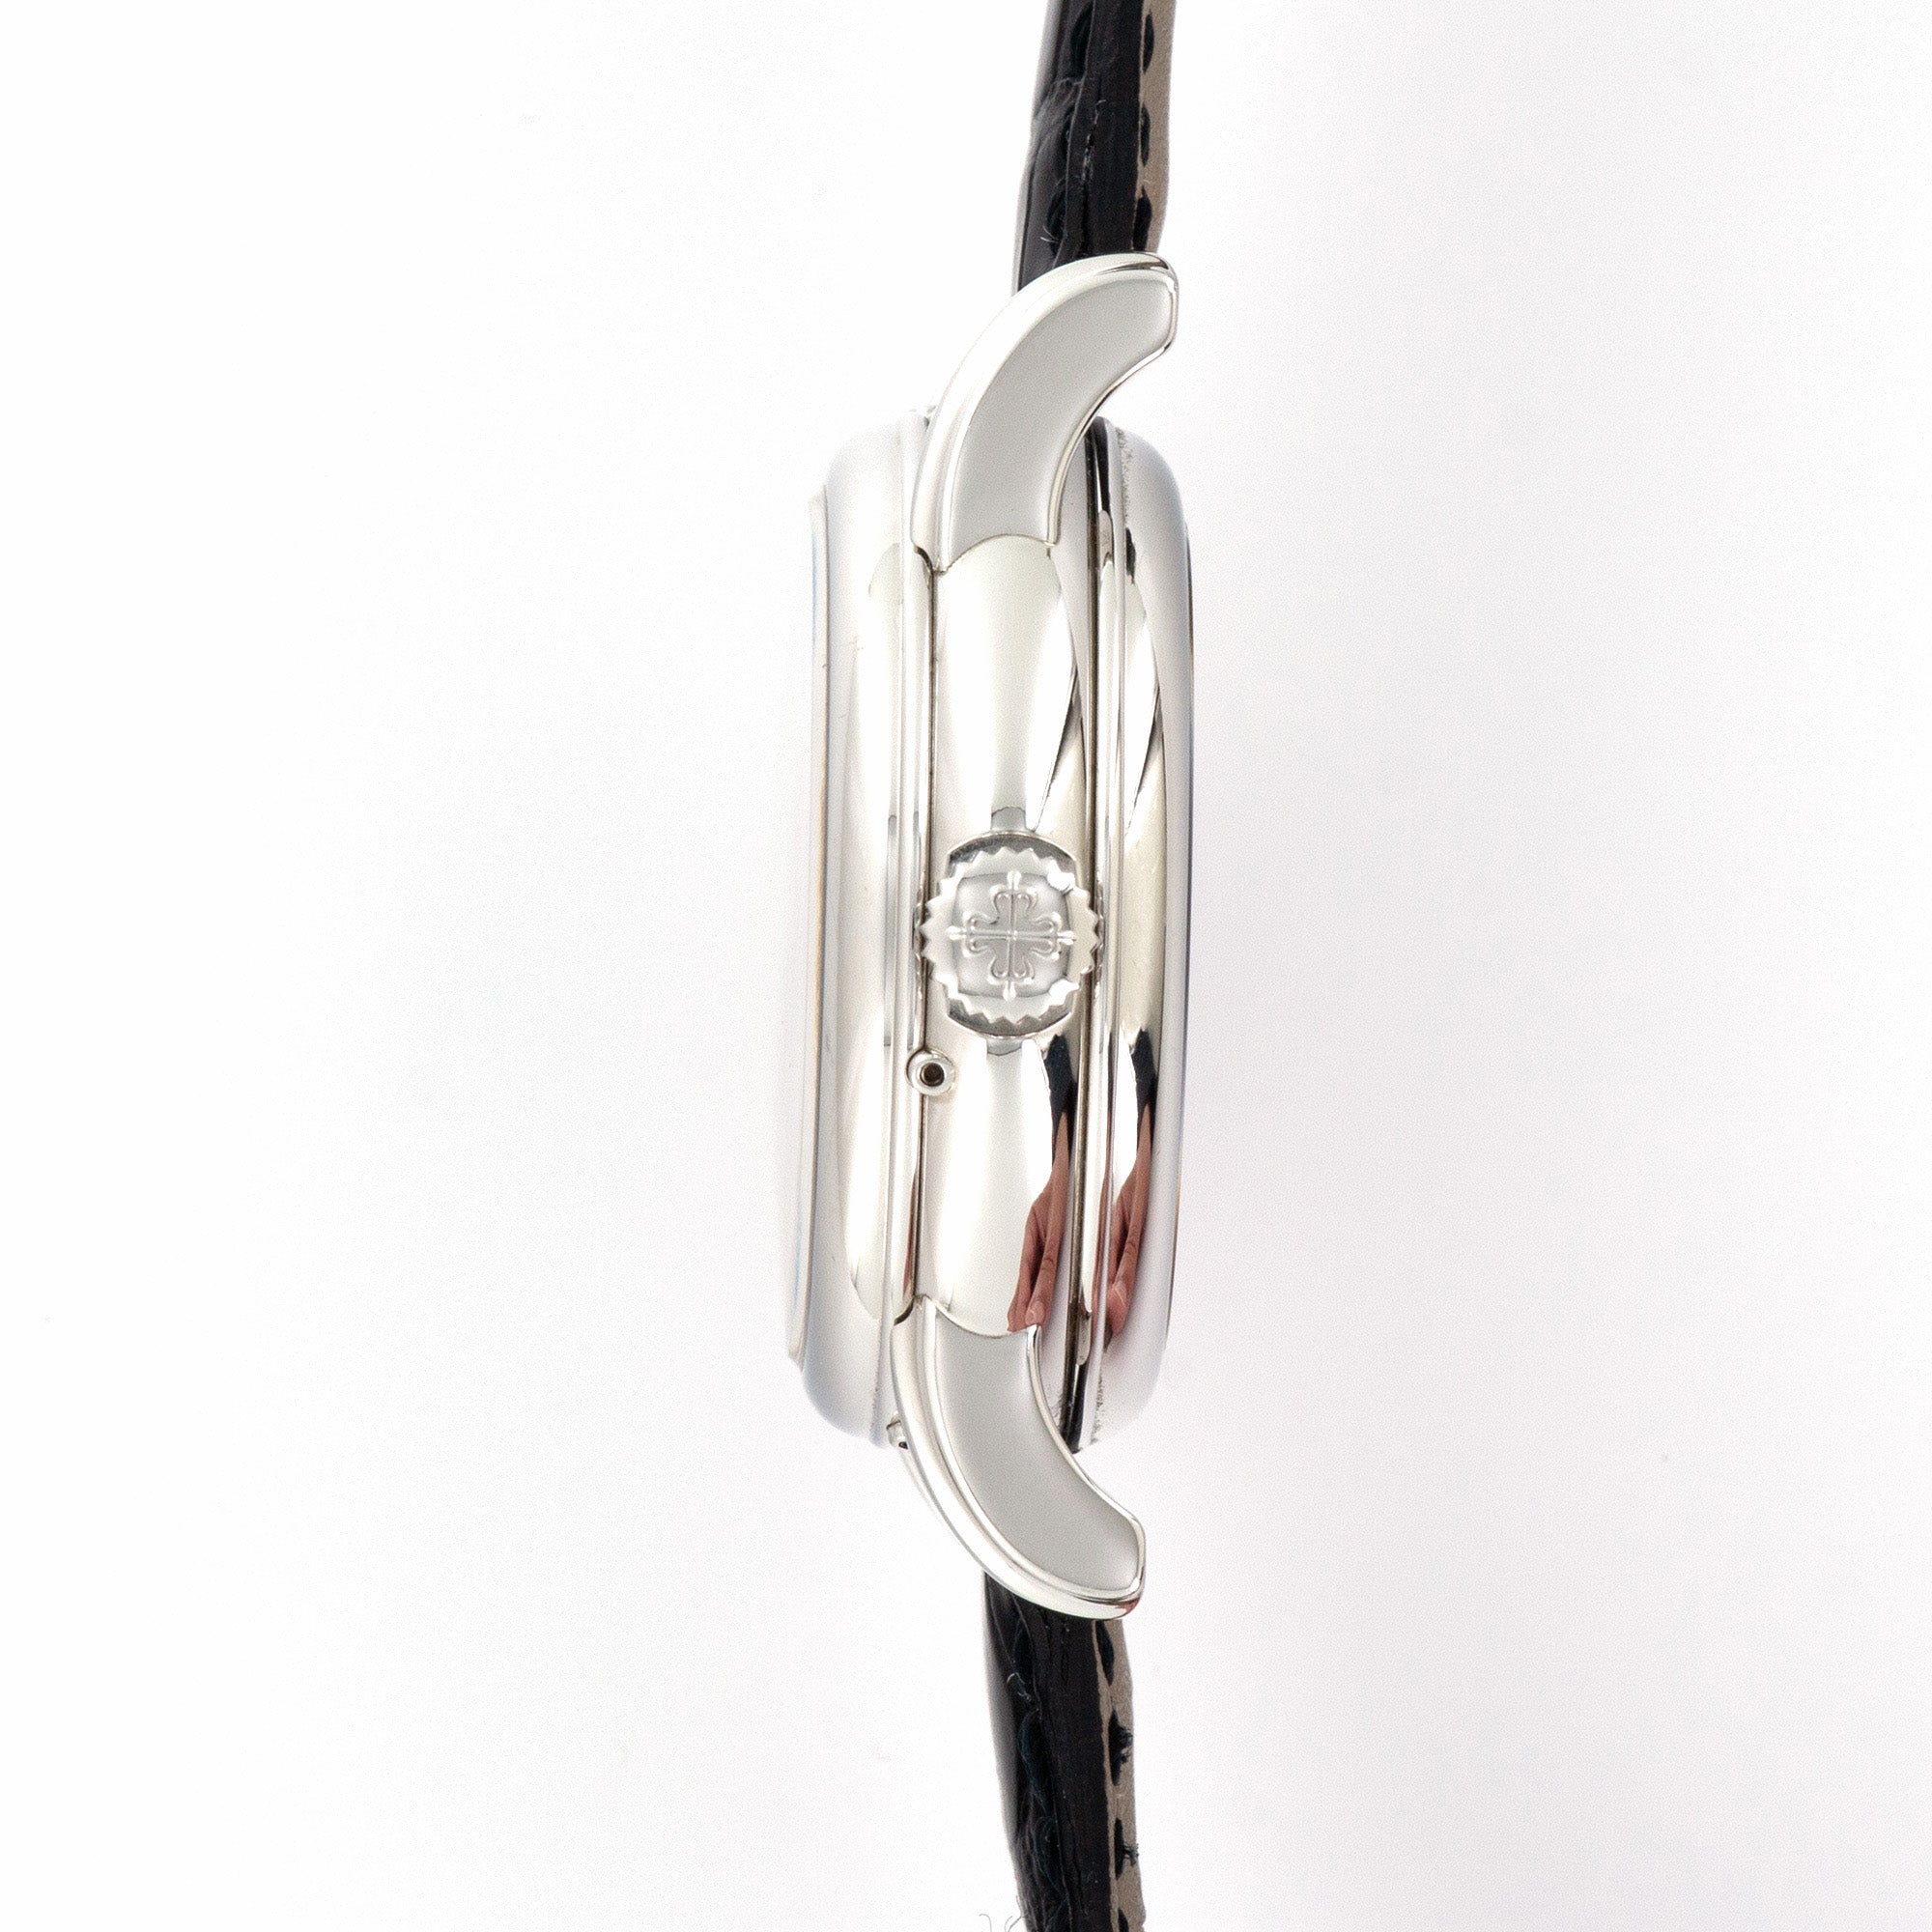 Patek Philippe - Patek Philippe Platinum Minute Repeating Tourbillon Watch Ref. 5016 - The Keystone Watches